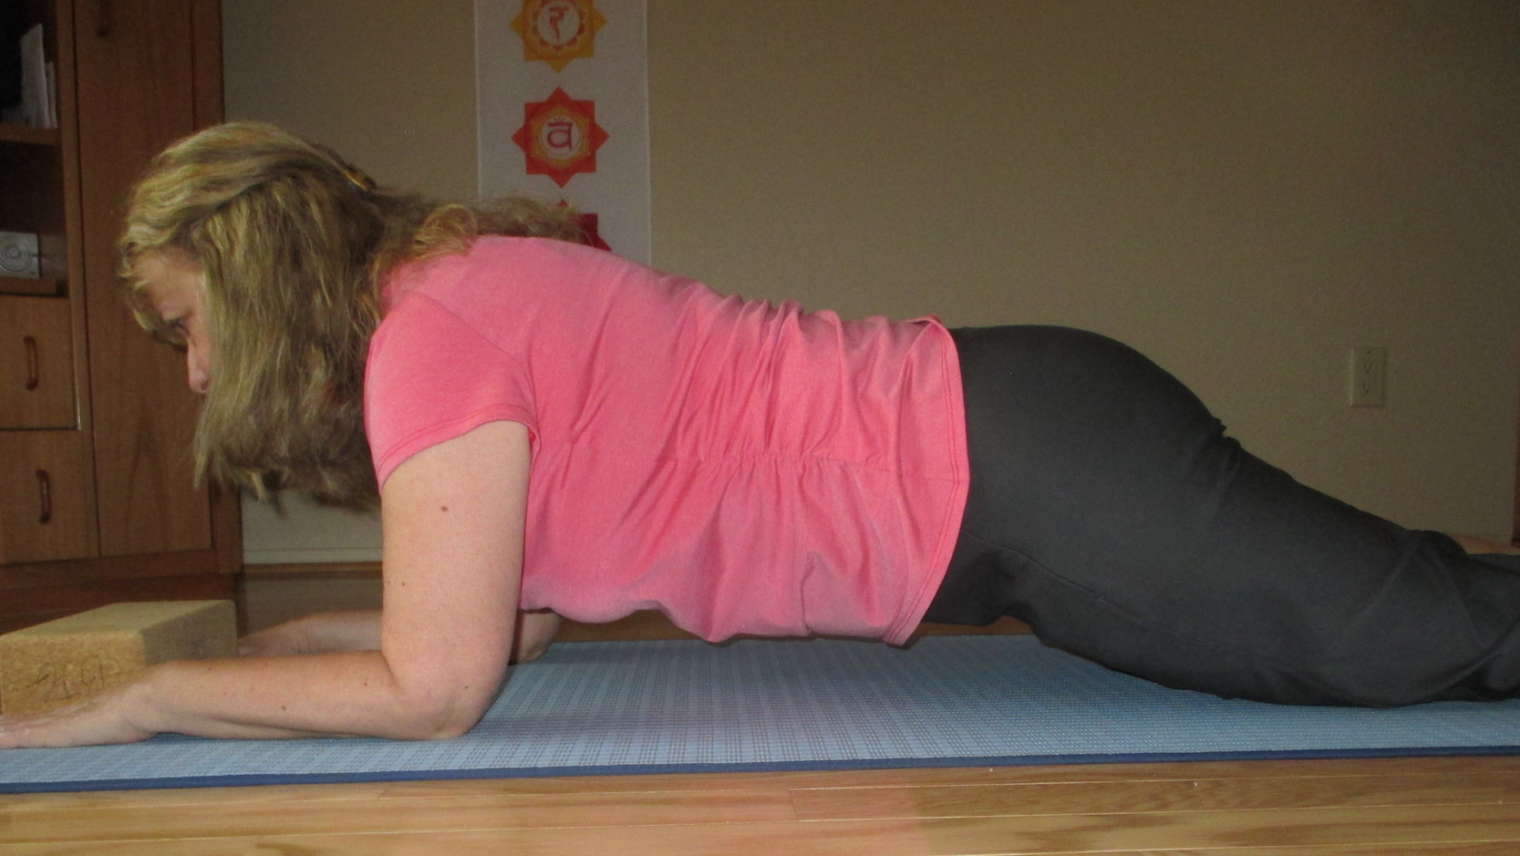 Easy Core Yoga Practices: Three More